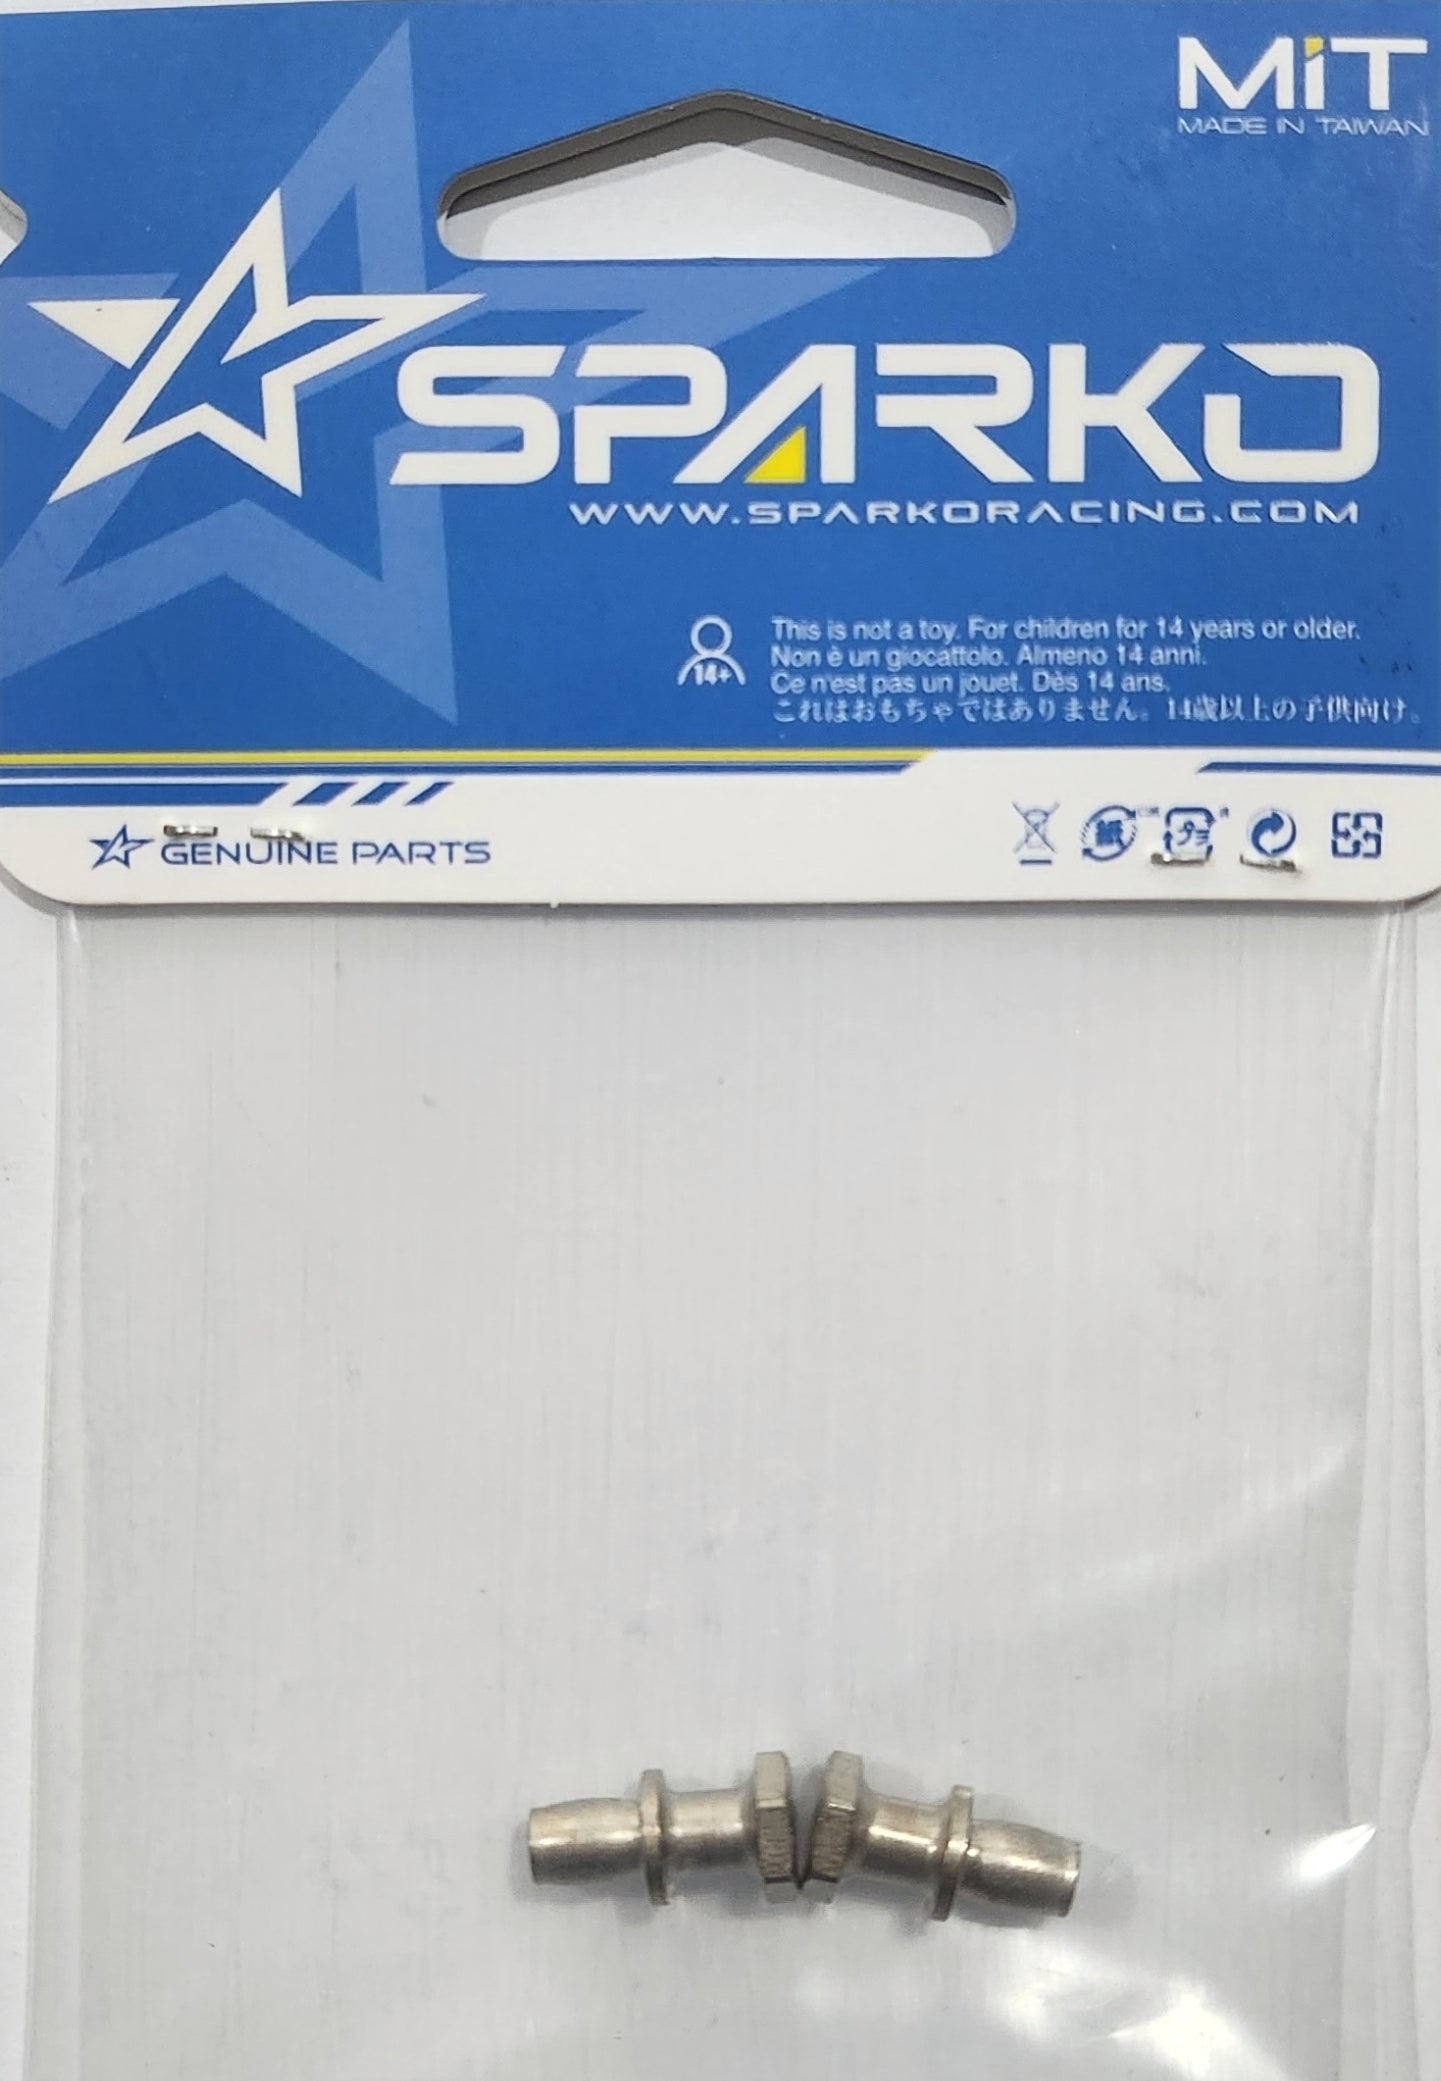 Sparko Racing Steel Shock Ball Stud 0 Offset for Front/Rear (2pcs)